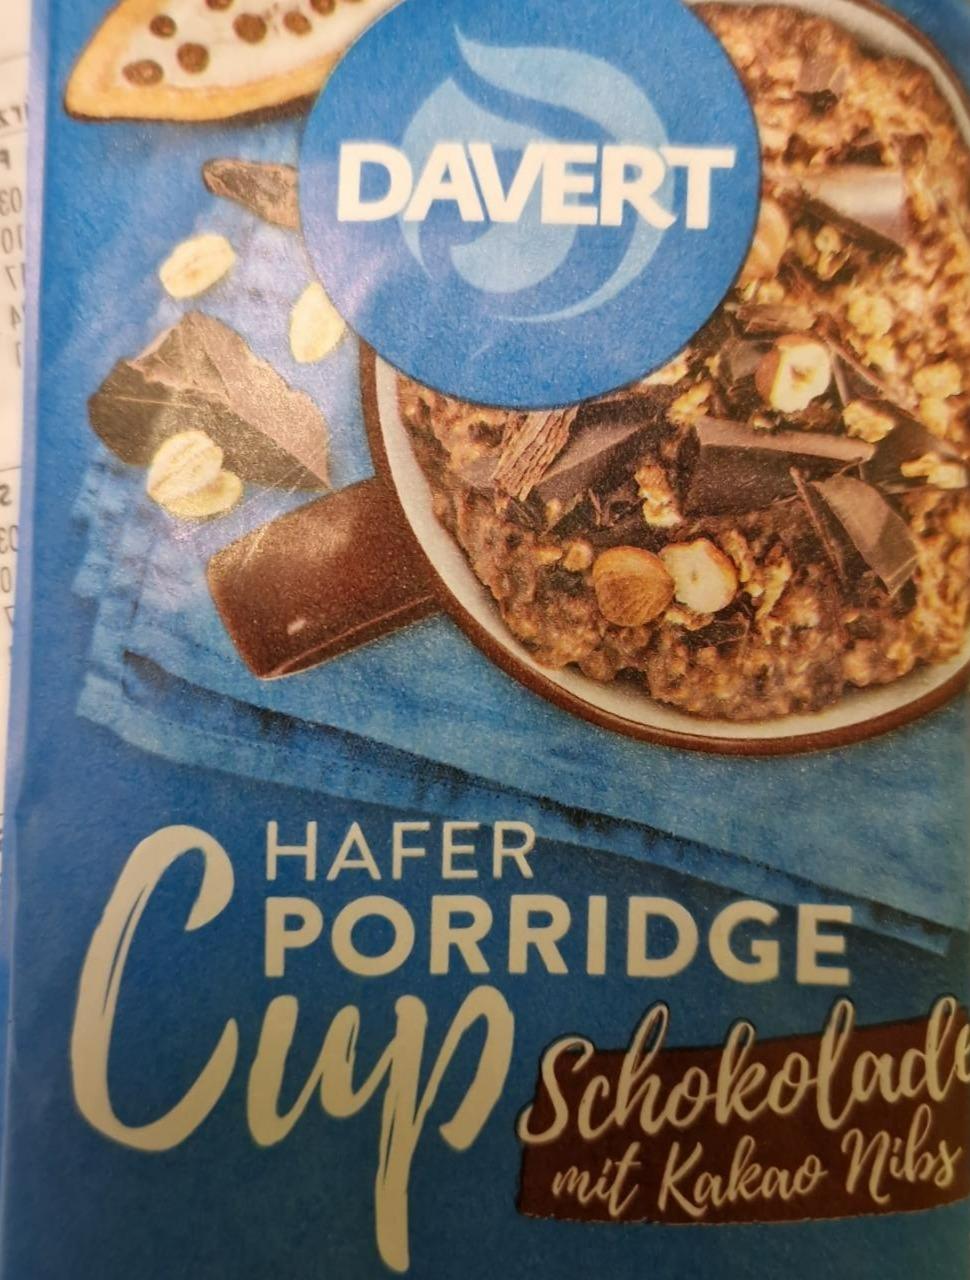 Fotografie - Hafer Porridge Cup Schokolade mit Kakao Nibs Davert